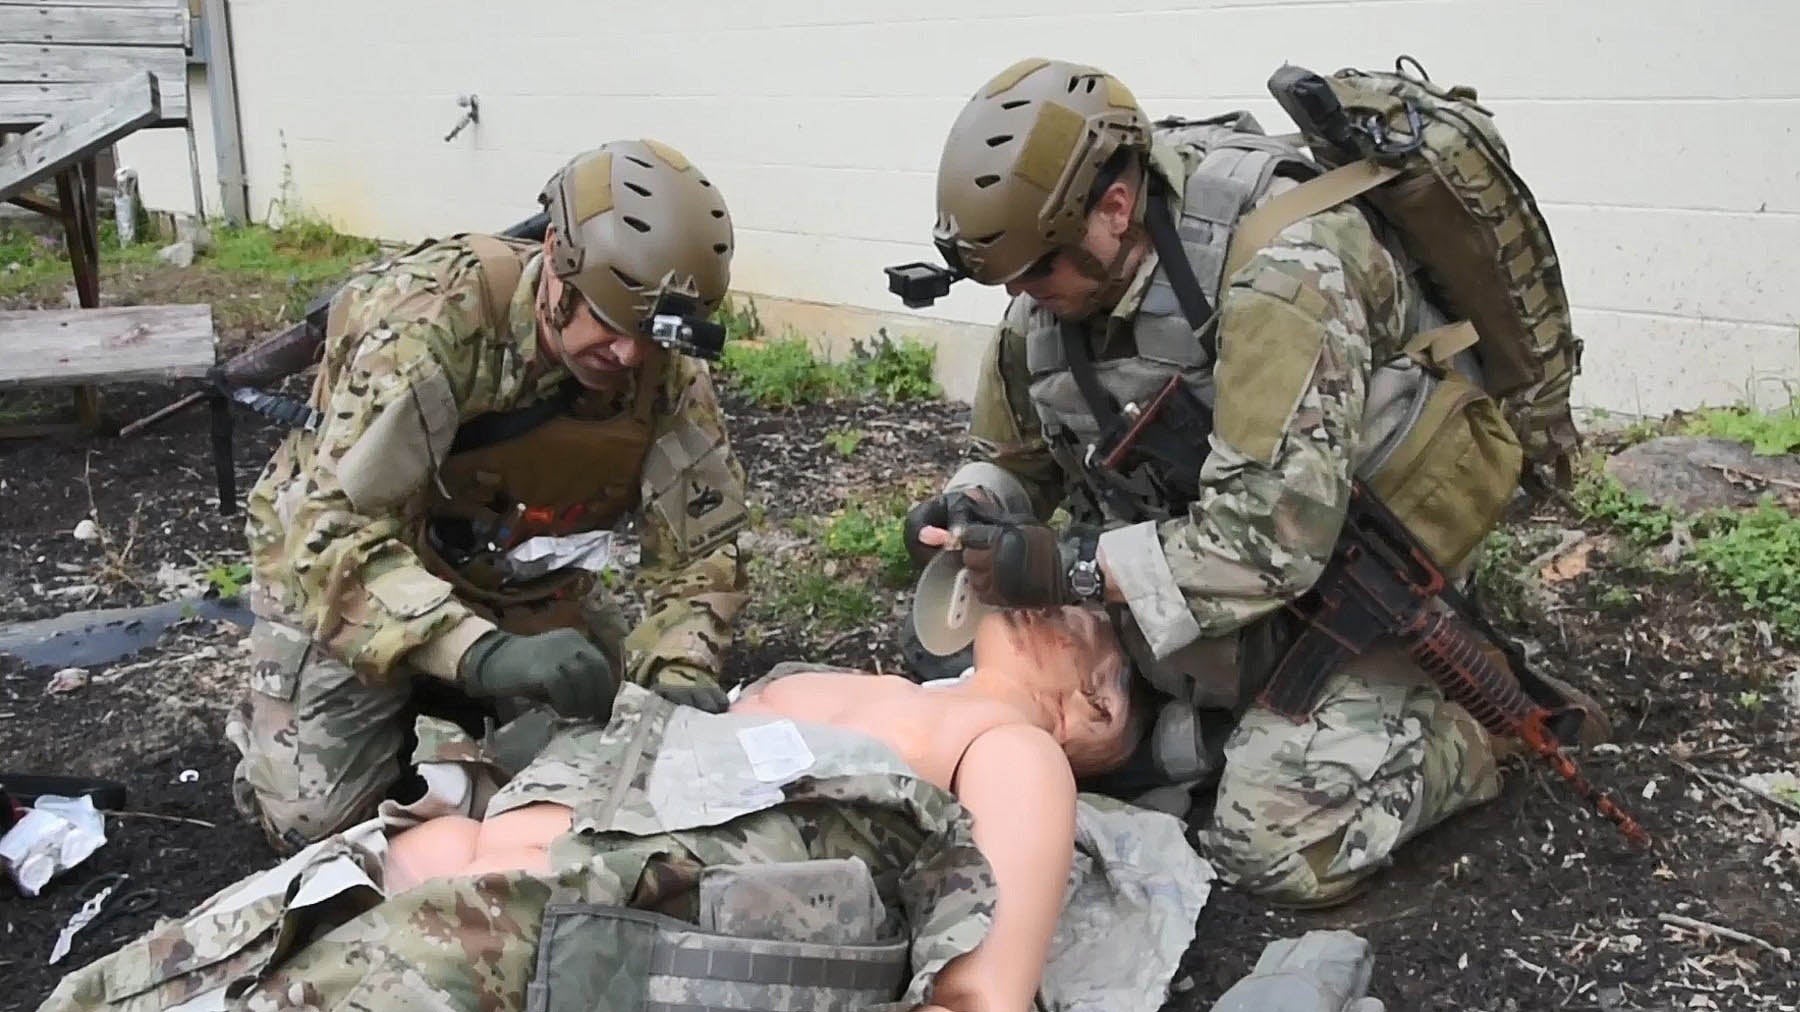 Army medics train